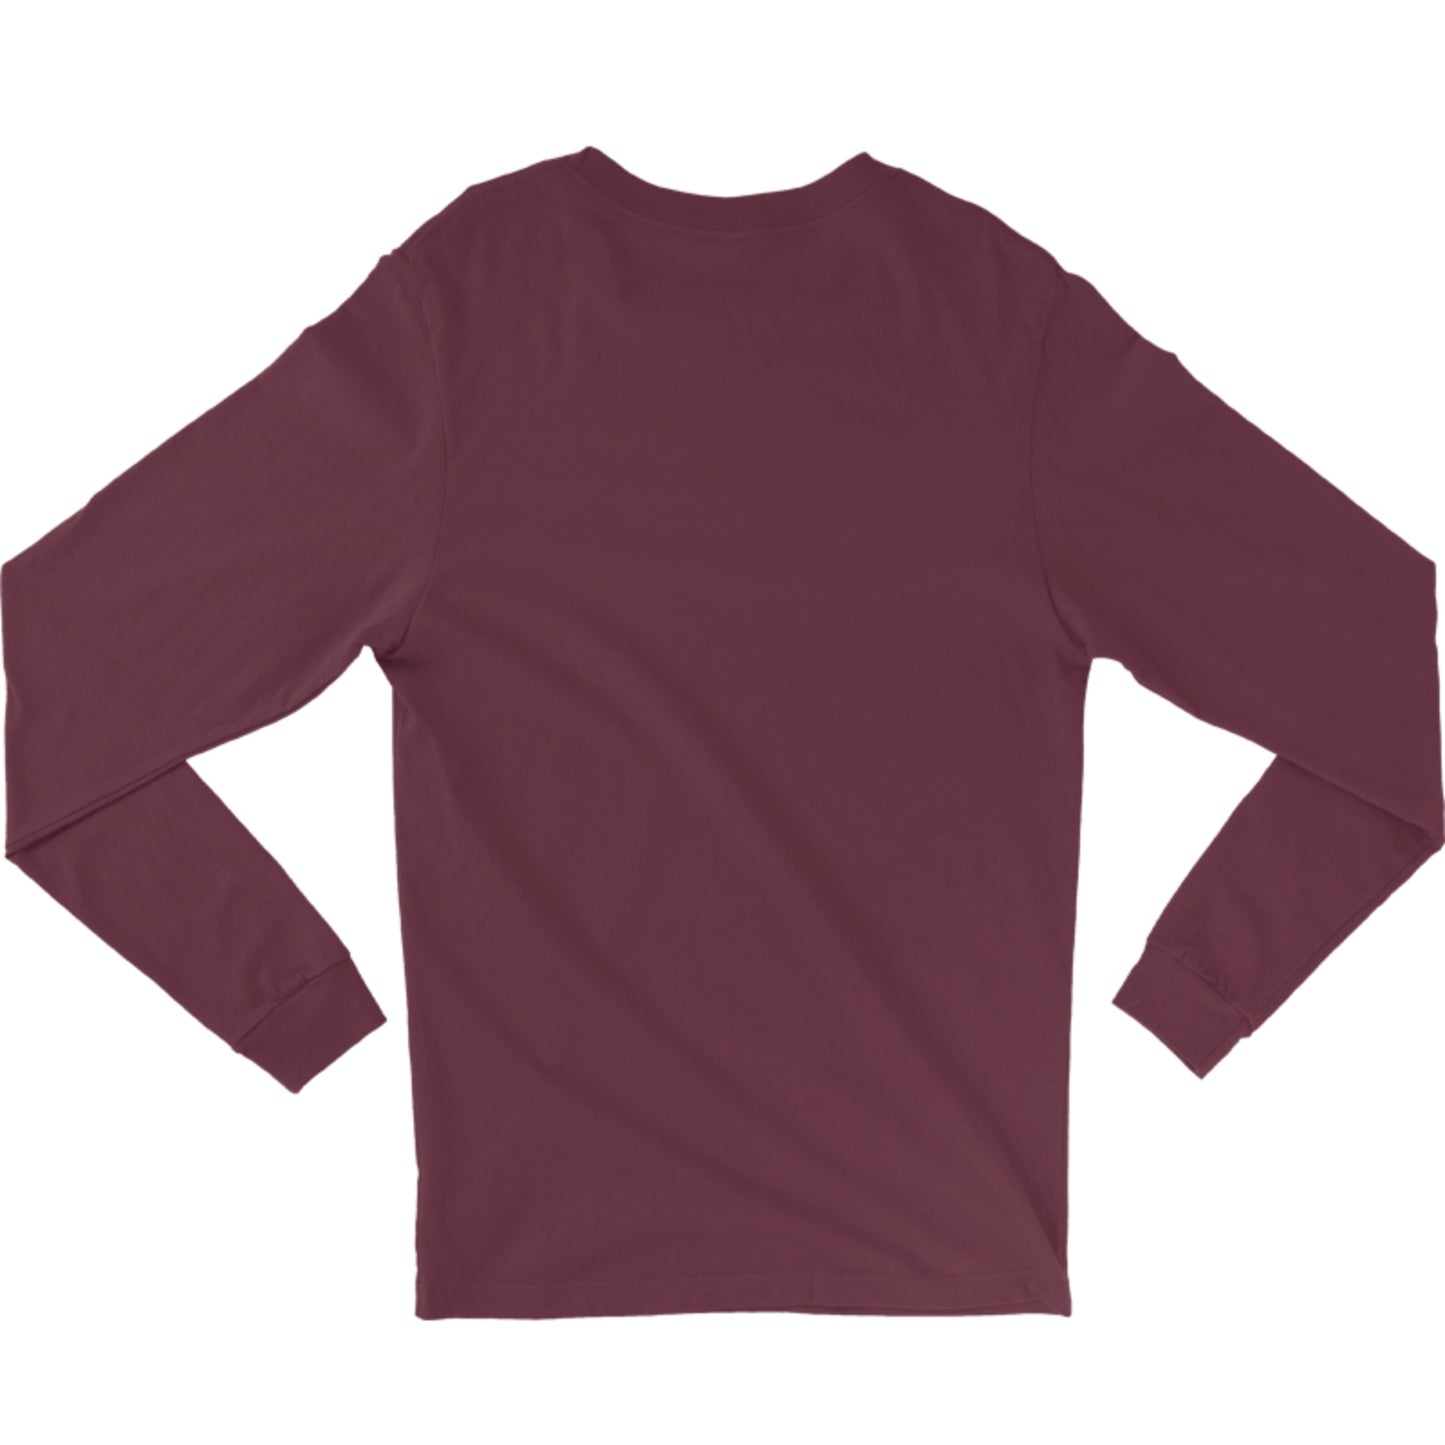 Twizzle the Season, Jersey Long-Sleeve T-shirt